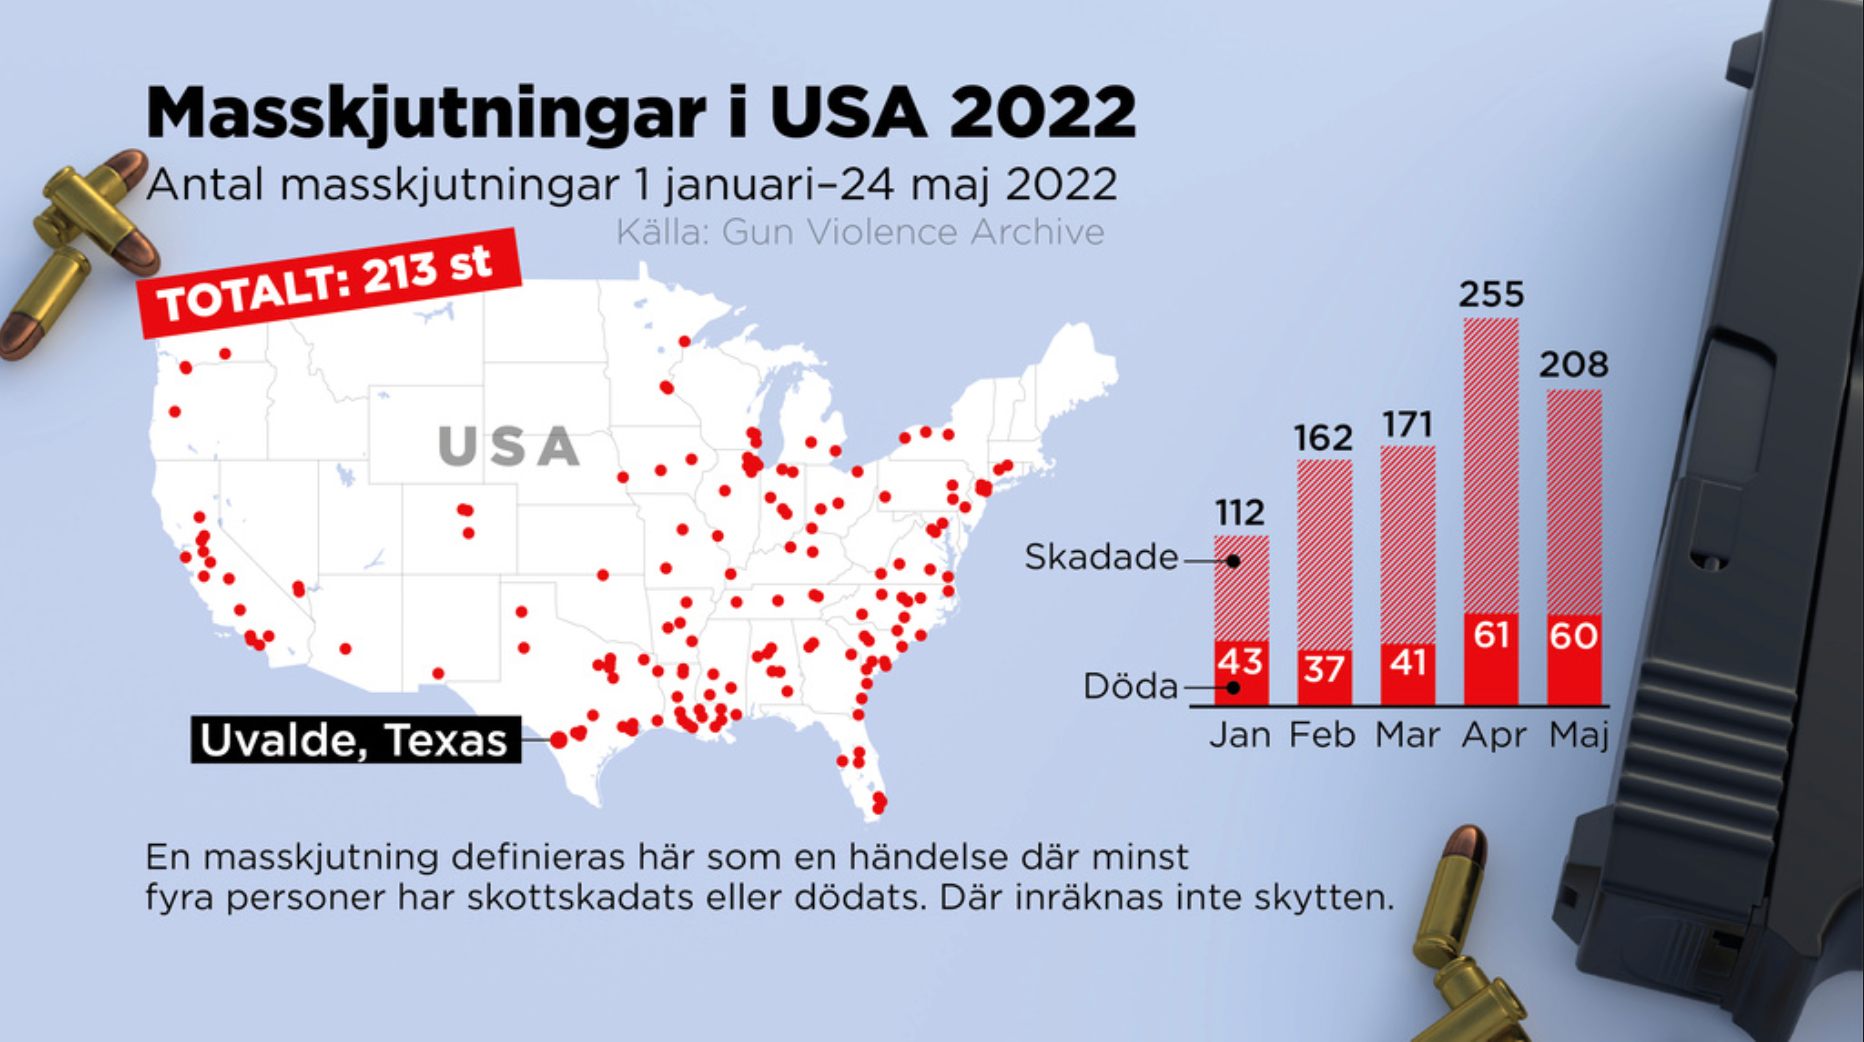 Antal masskjutningar i USA 1 januari till 24 maj 2022.